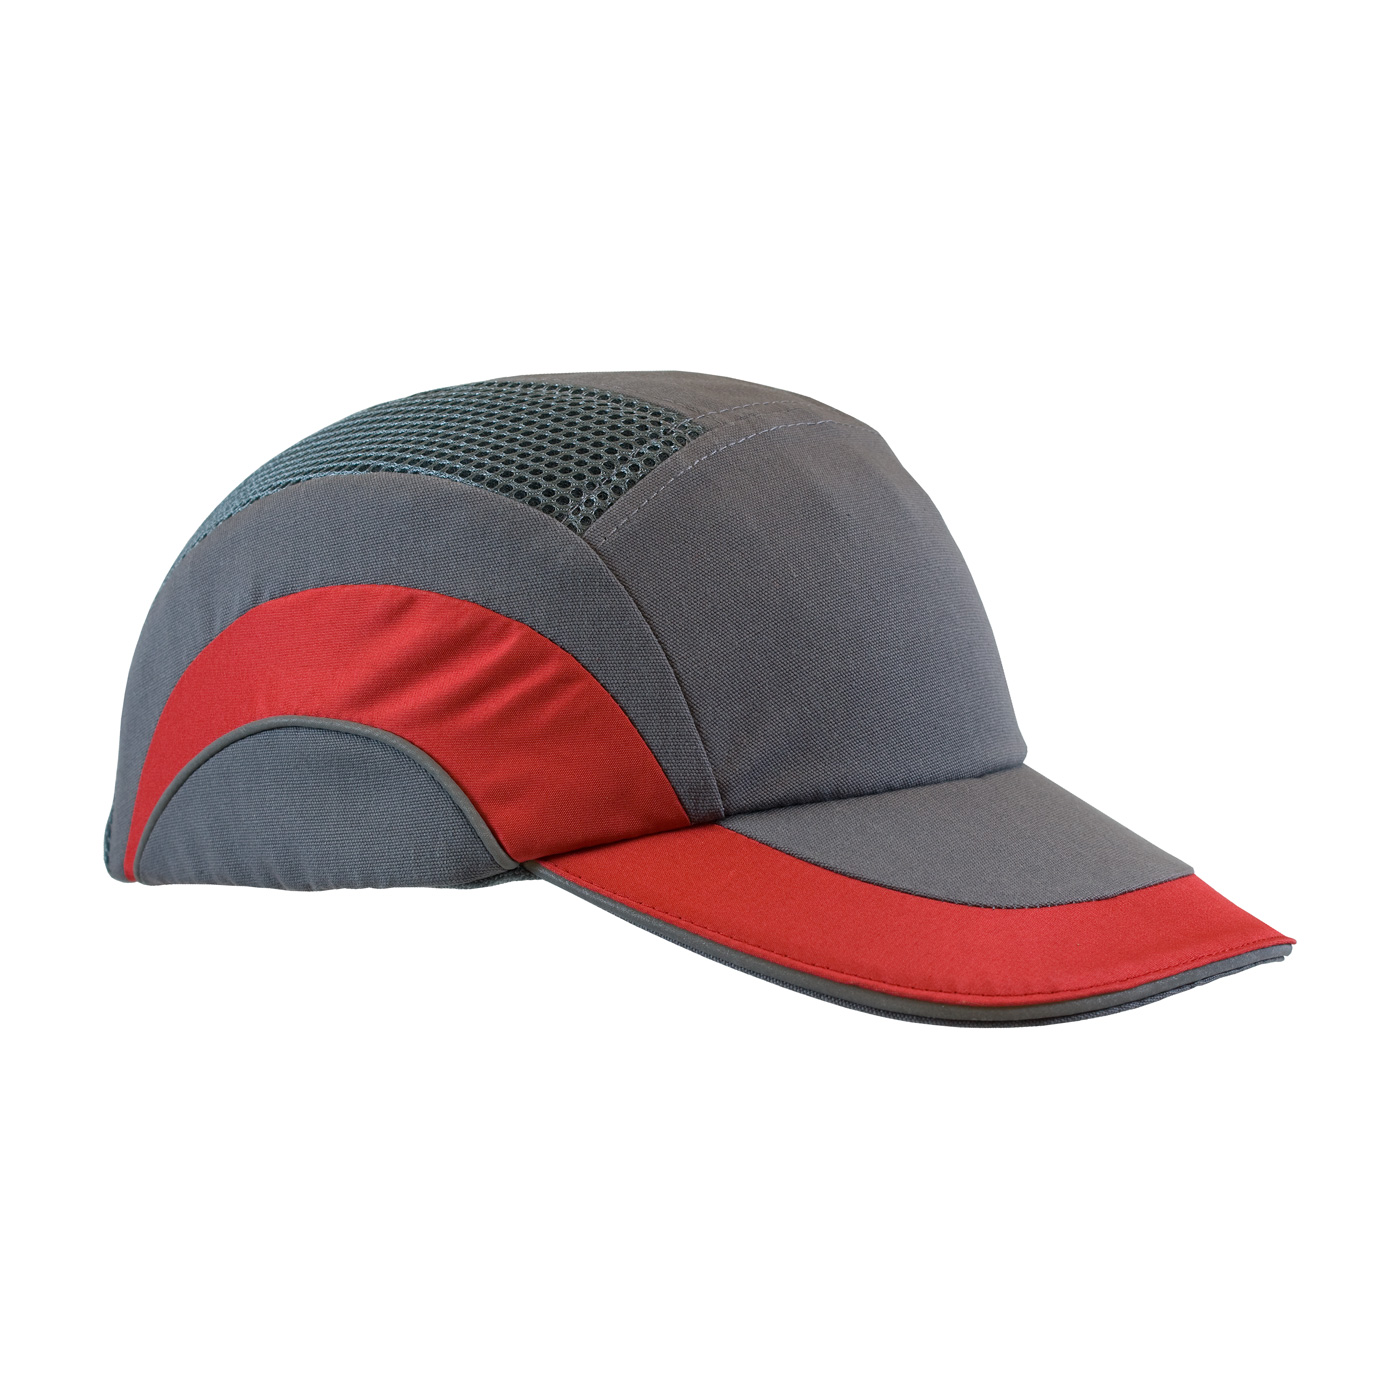 Hardcap A1 Bump Cap Protective Industrial Products